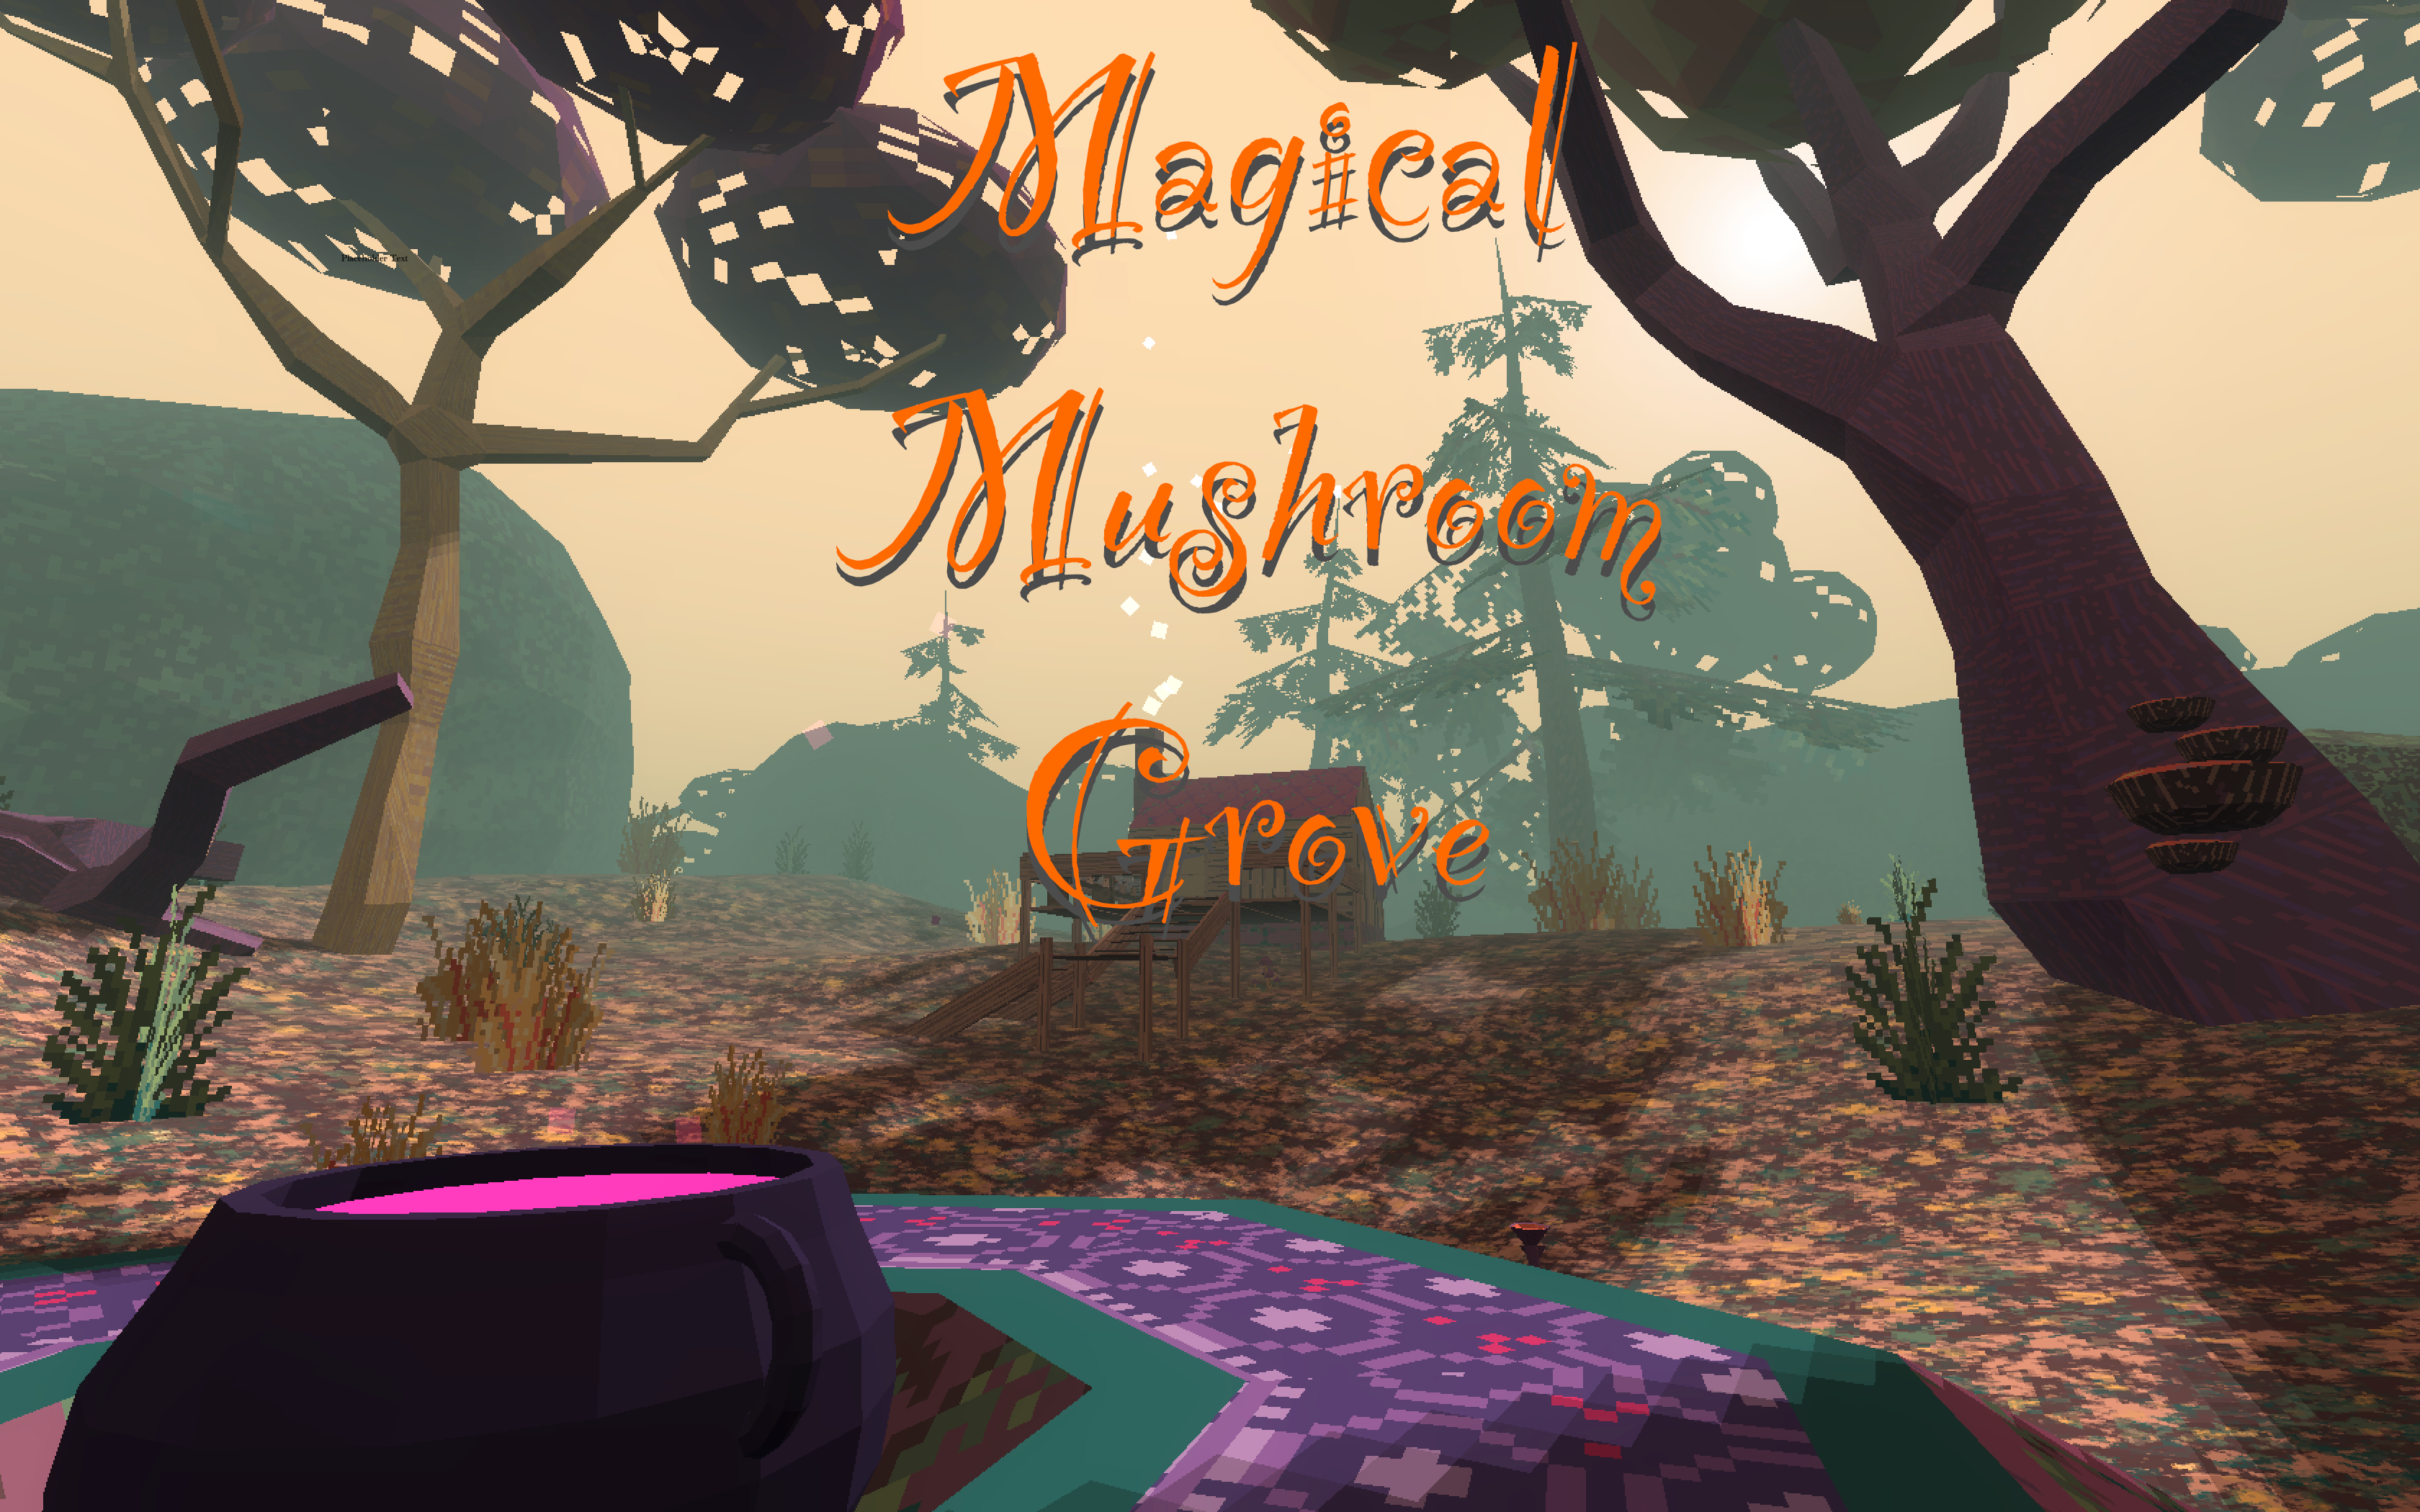 Magical Mushroom Grove